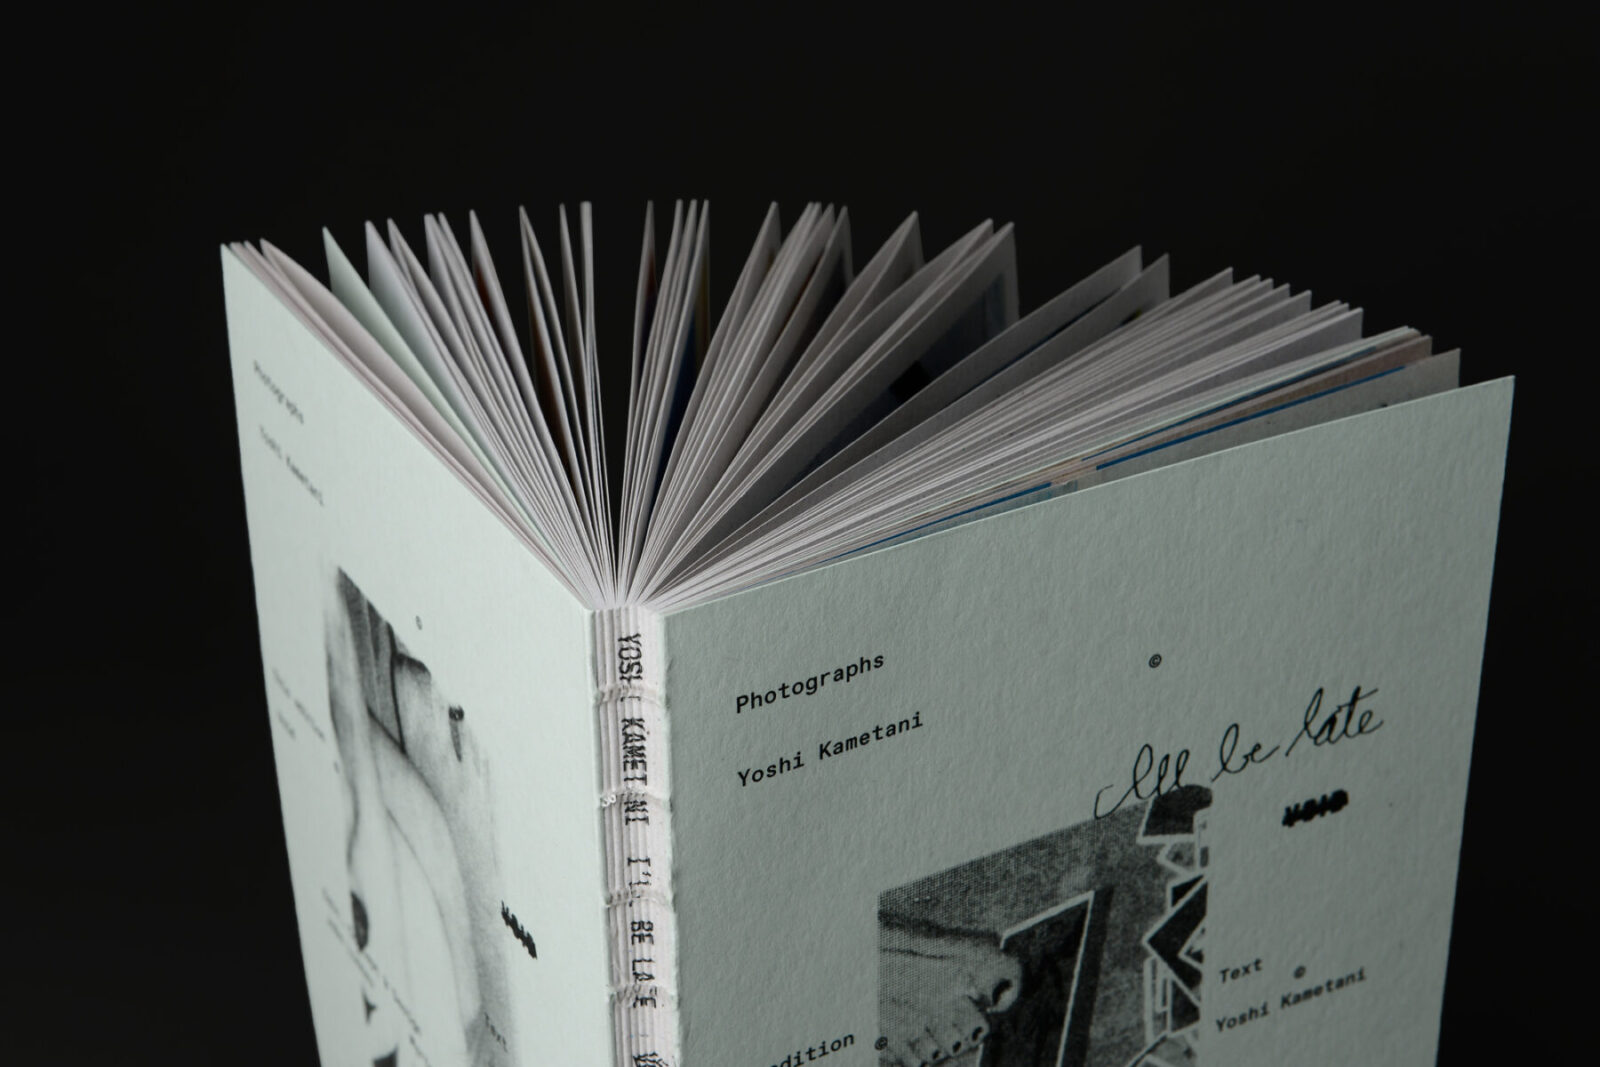 Archisearch Παρουσίαση βιβλίου και έκθεση φωτογραφίας I’ll Be Late - Yoshi Kametani | Πέμπτη 14 Μαρτίου 2024, 7μμ – Ηyper Hypo